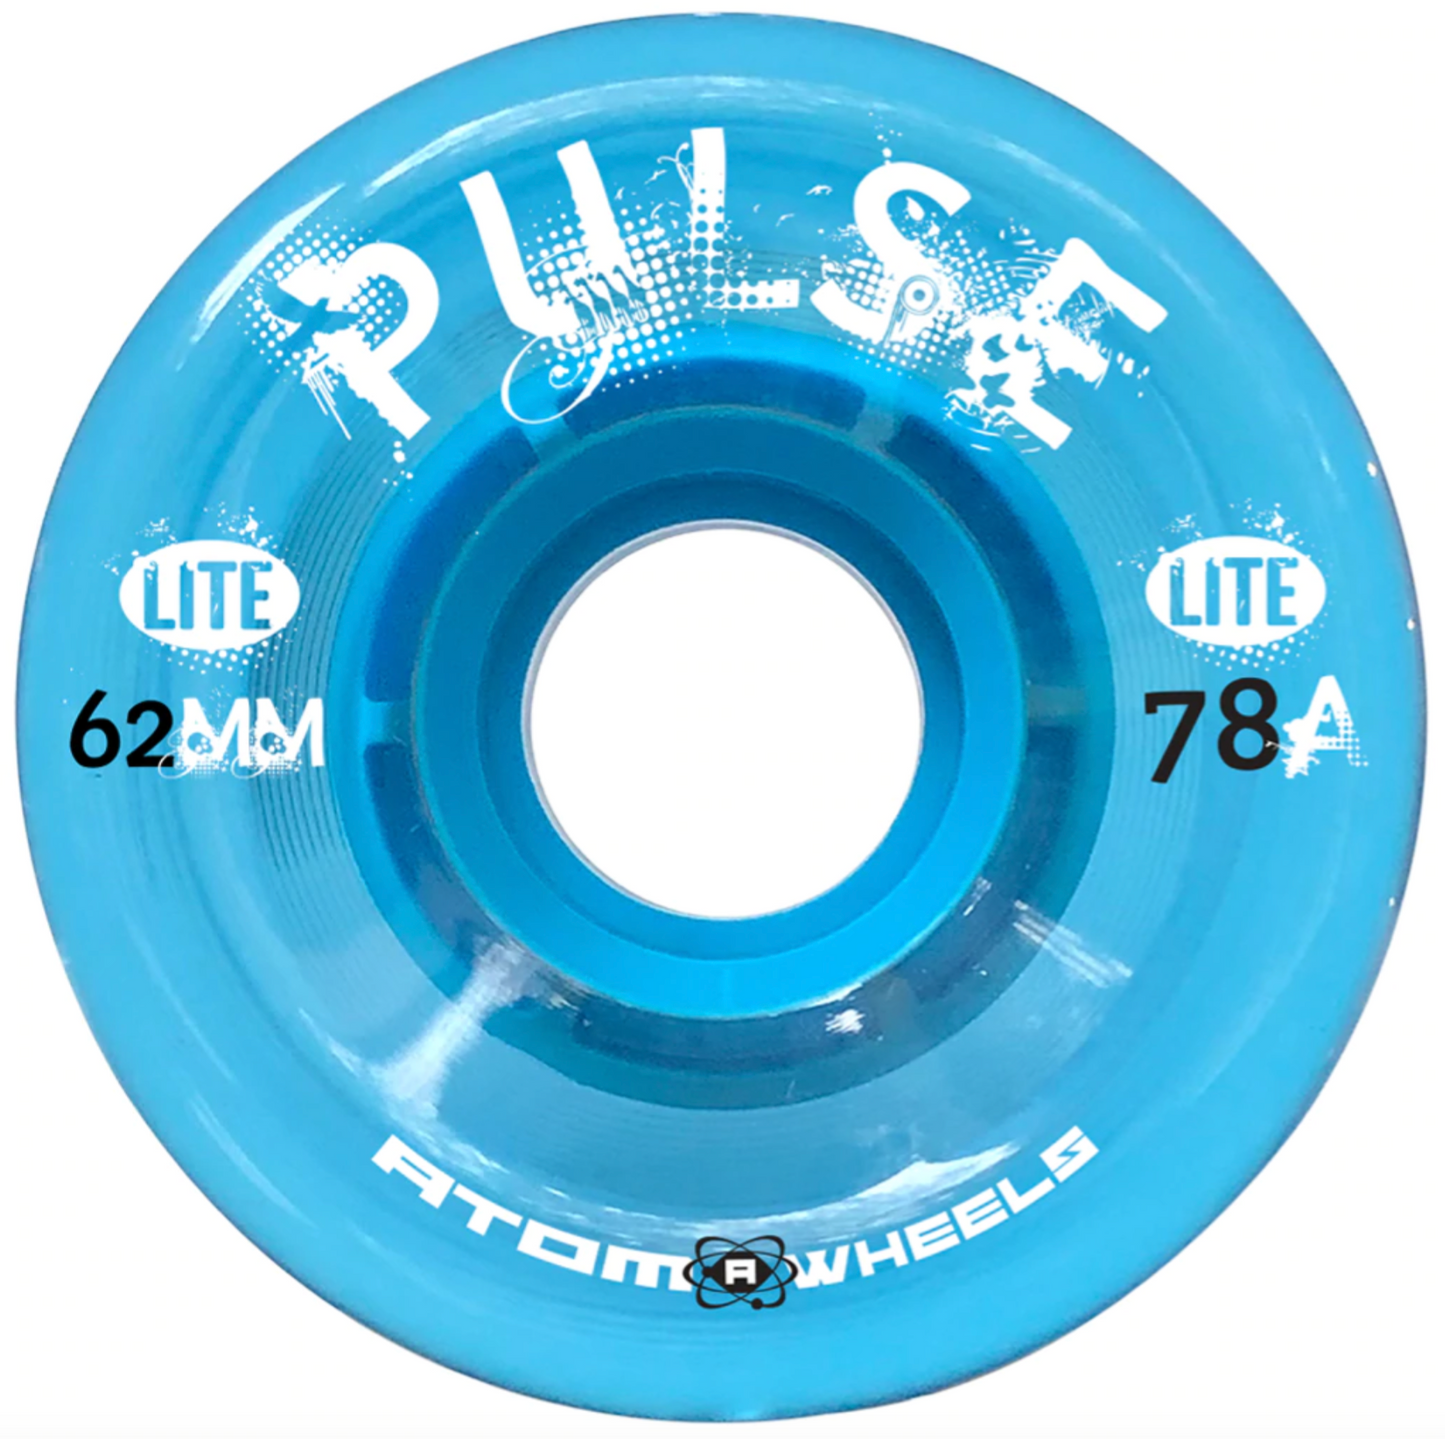 Ruote Atom Pulse Lite BLU | 78A x 62mm | Ruote da esterno per pattini a rotelle quad - pack da 4 ruote